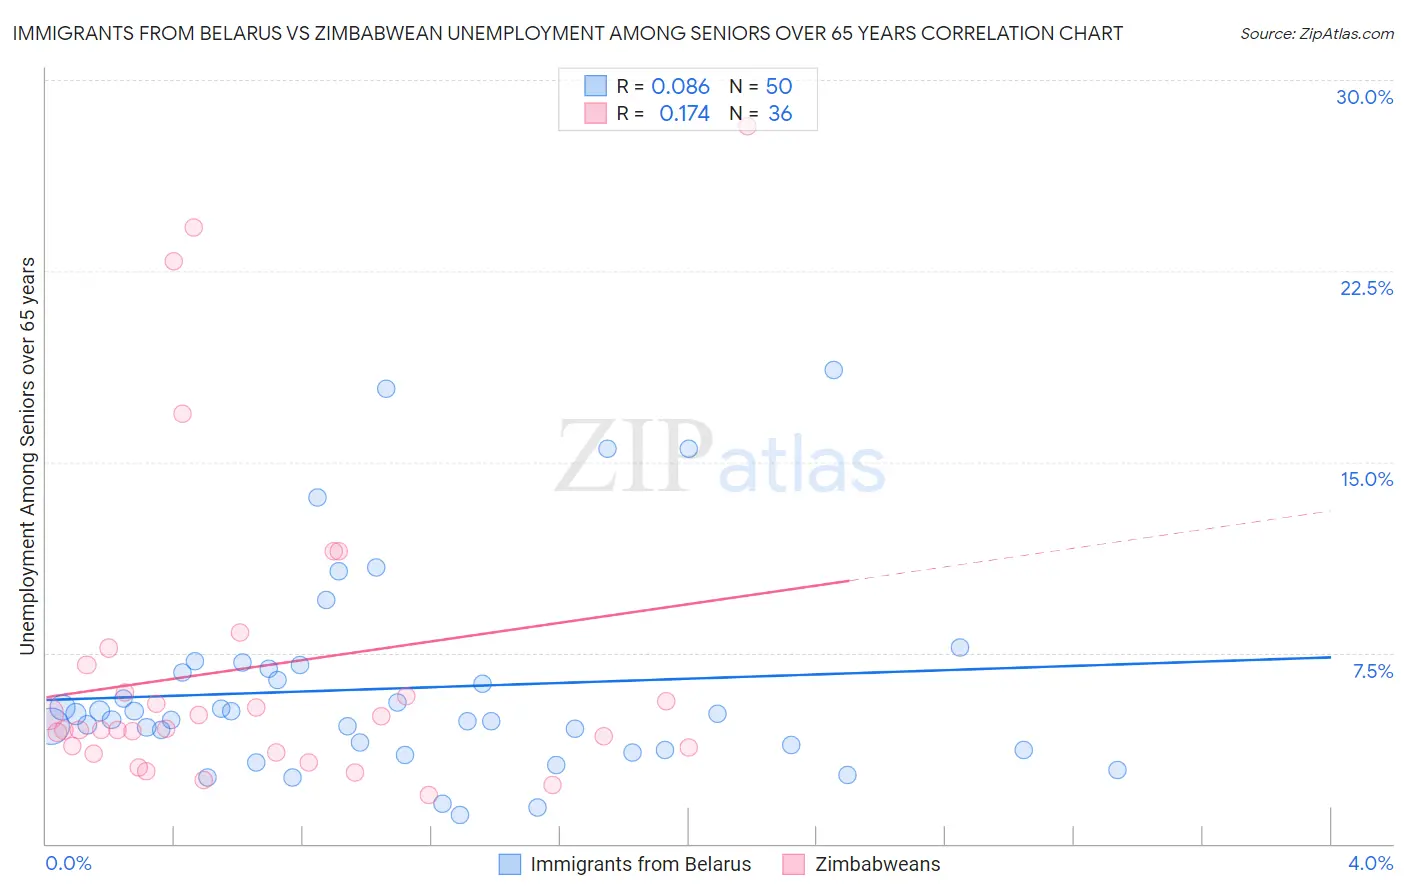 Immigrants from Belarus vs Zimbabwean Unemployment Among Seniors over 65 years